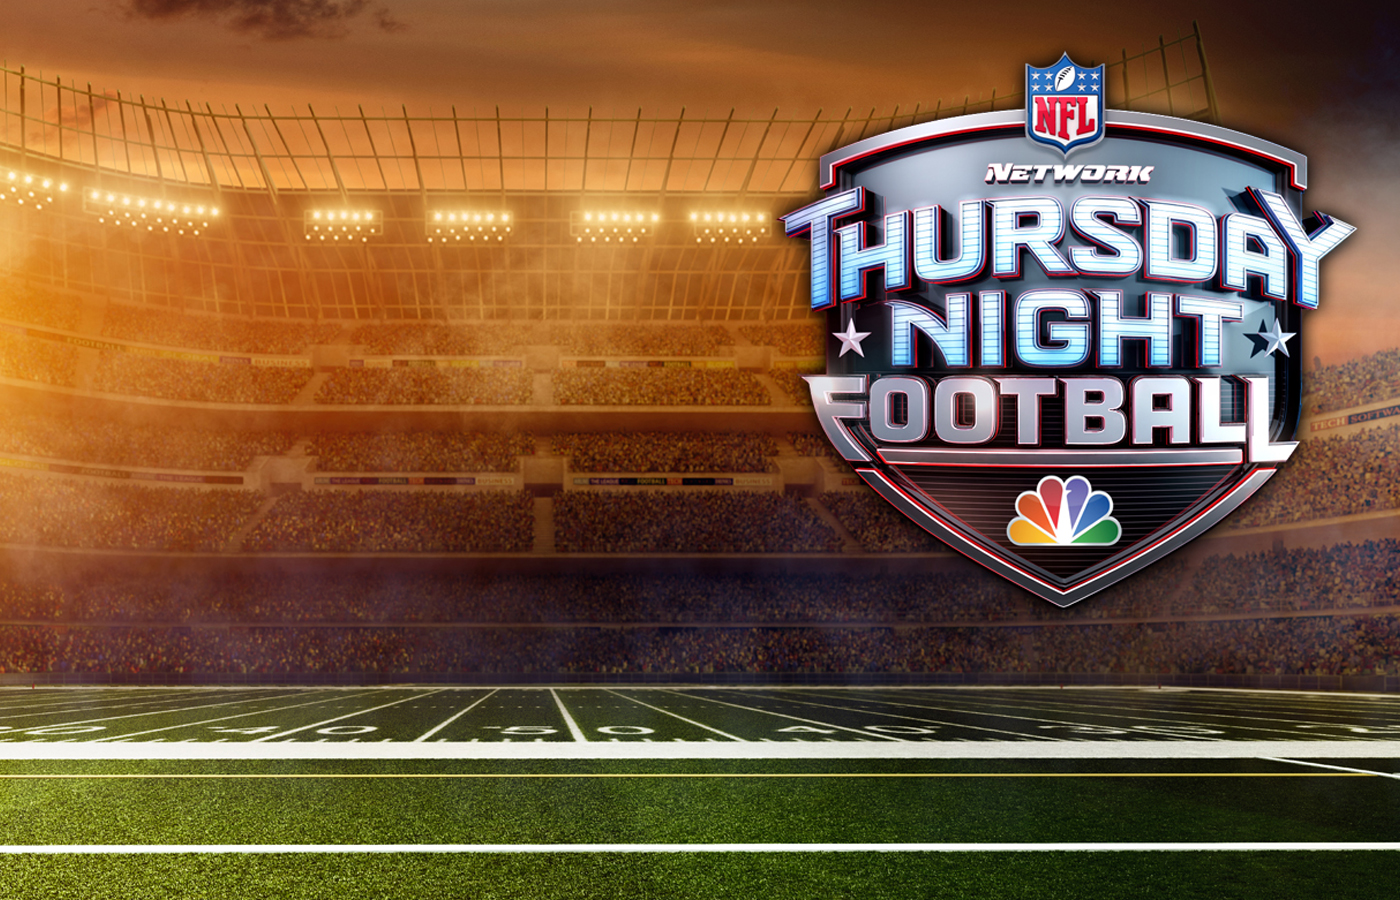 Inaugural "Thursday Night Football" season on NBC